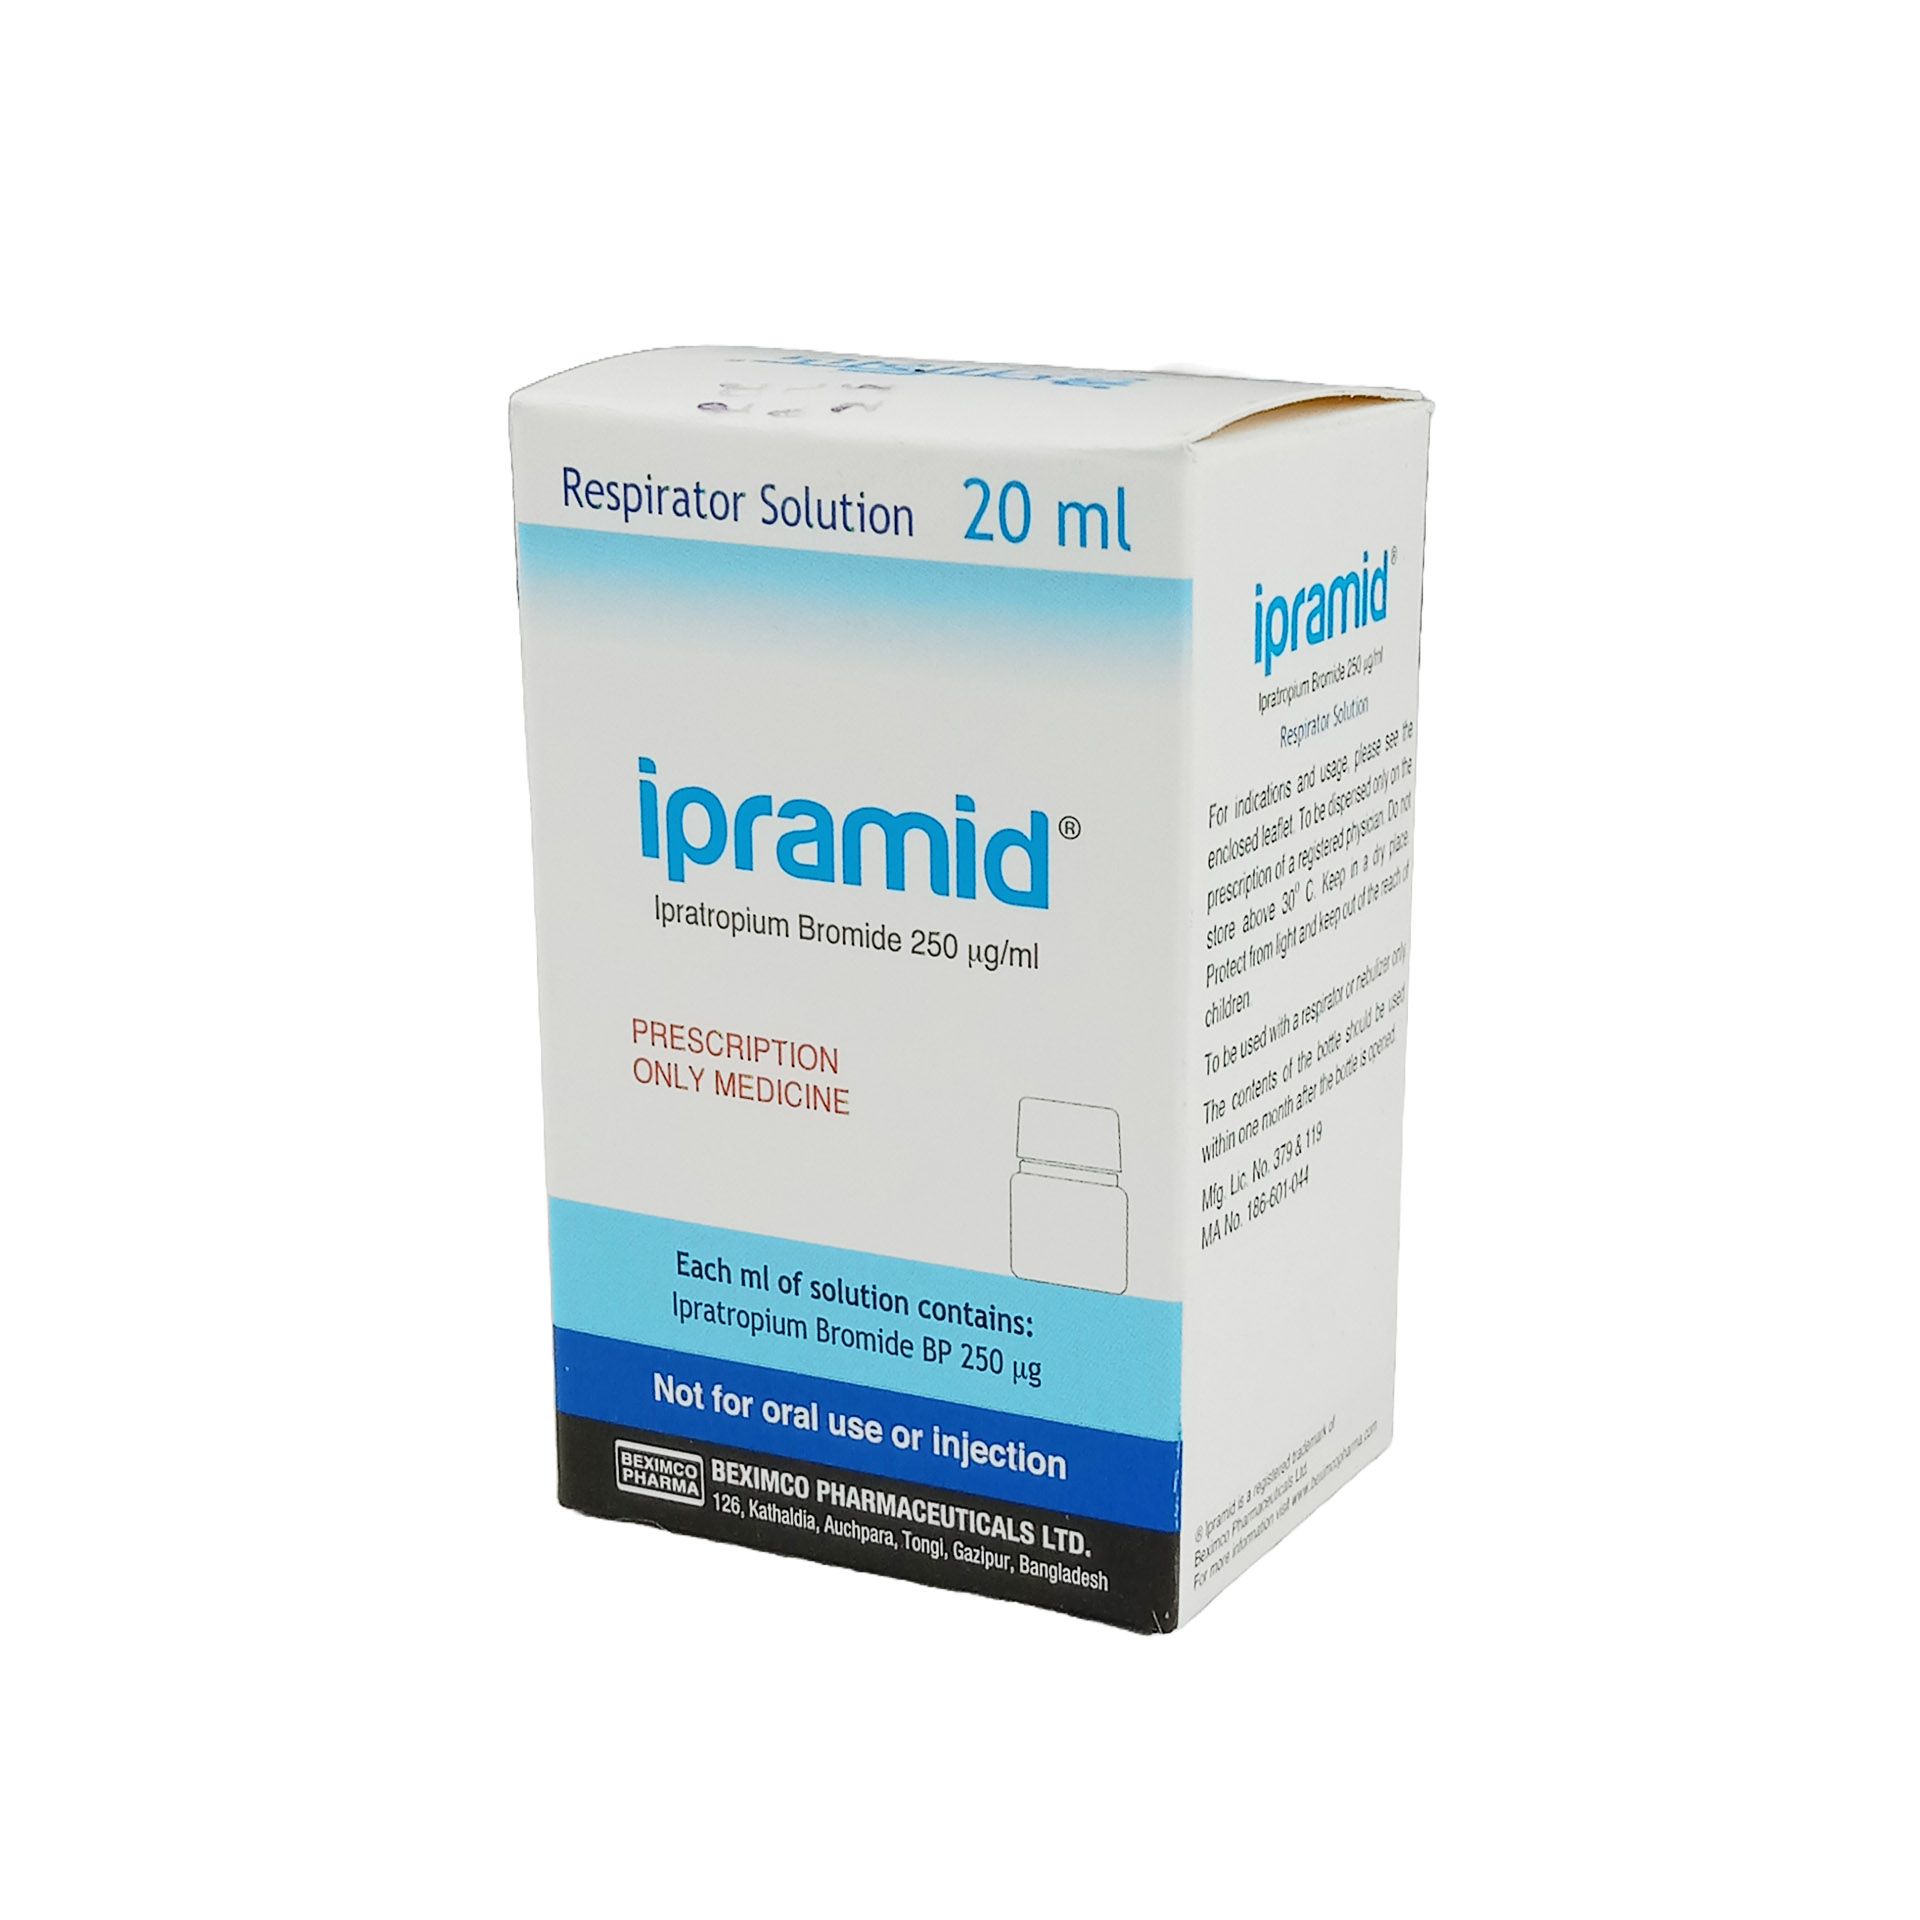 Ipramid Respirator Solution 250mcg/ml Nebuliser Solution